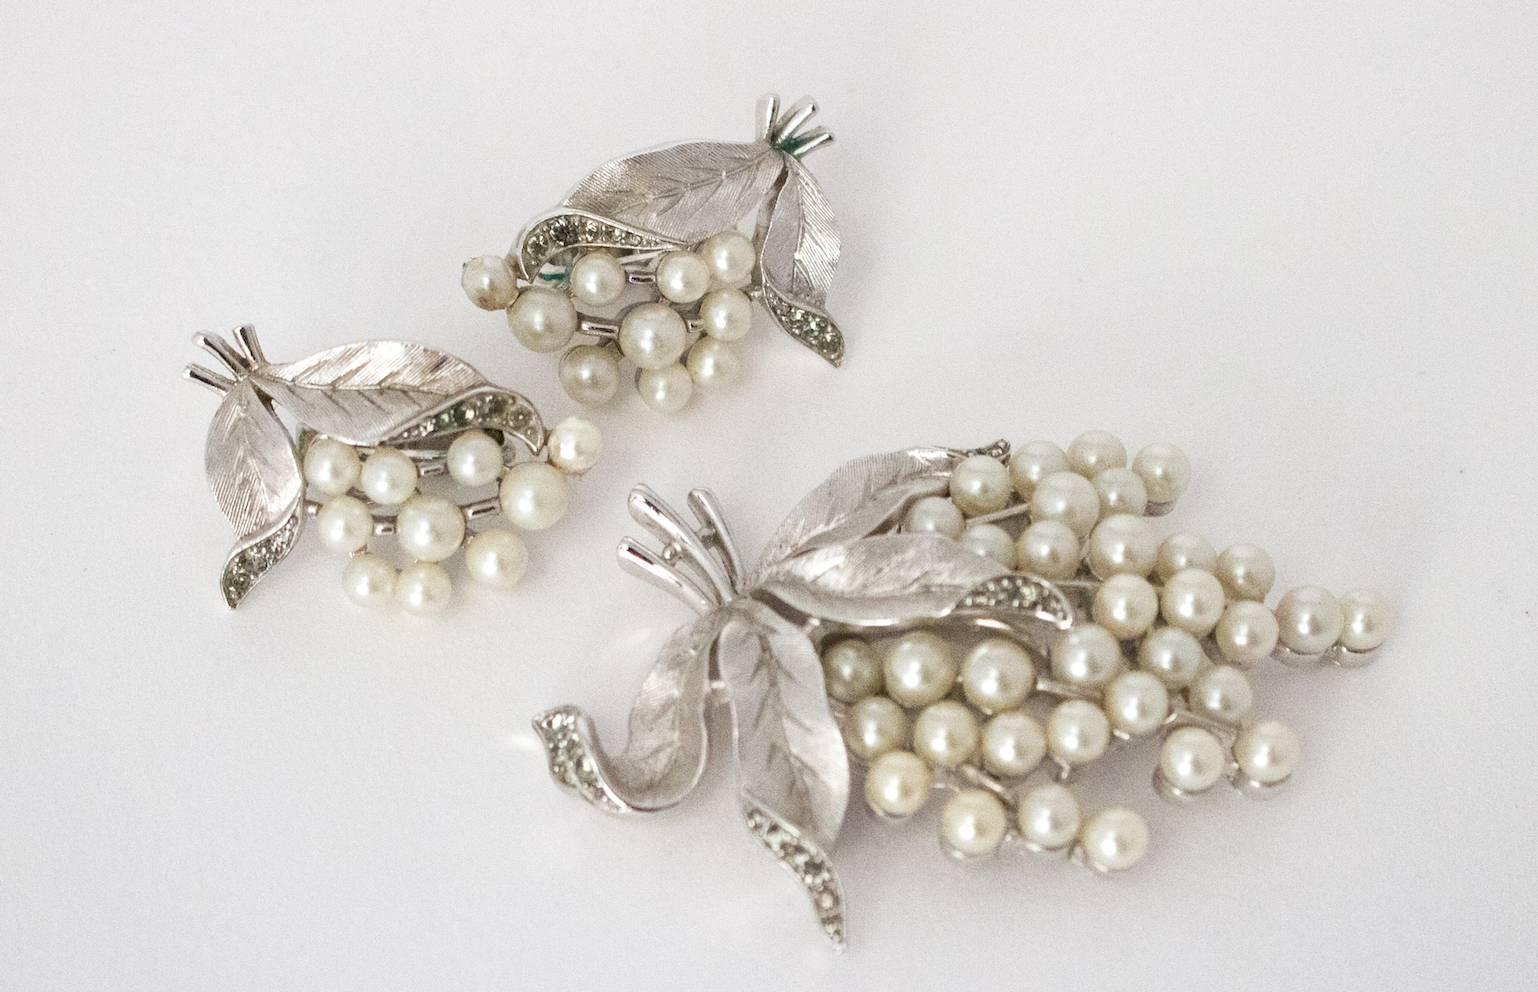 60s Trifari Silver Tone Pearl Bouquet Brooch and Earring Set

Earrings 1 1/4